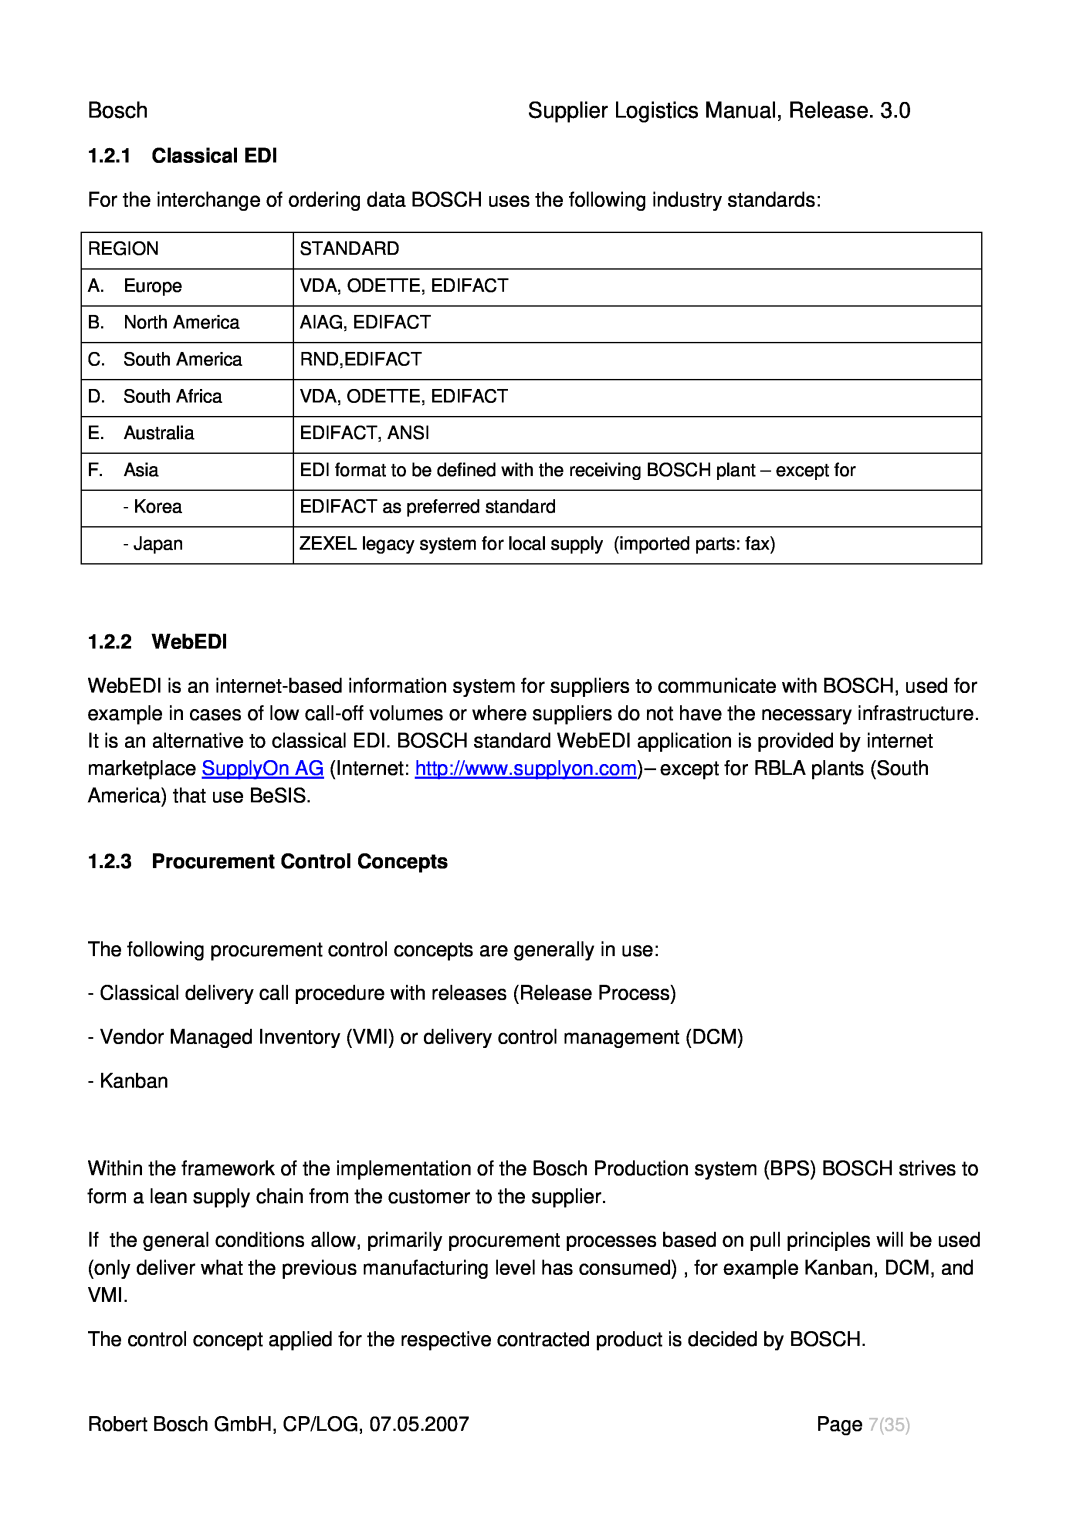 Bosch Appliances manual 1.2.1Classical EDI, 1.2.2WebEDI, 1.2.3Procurement Control Concepts, Bosch 